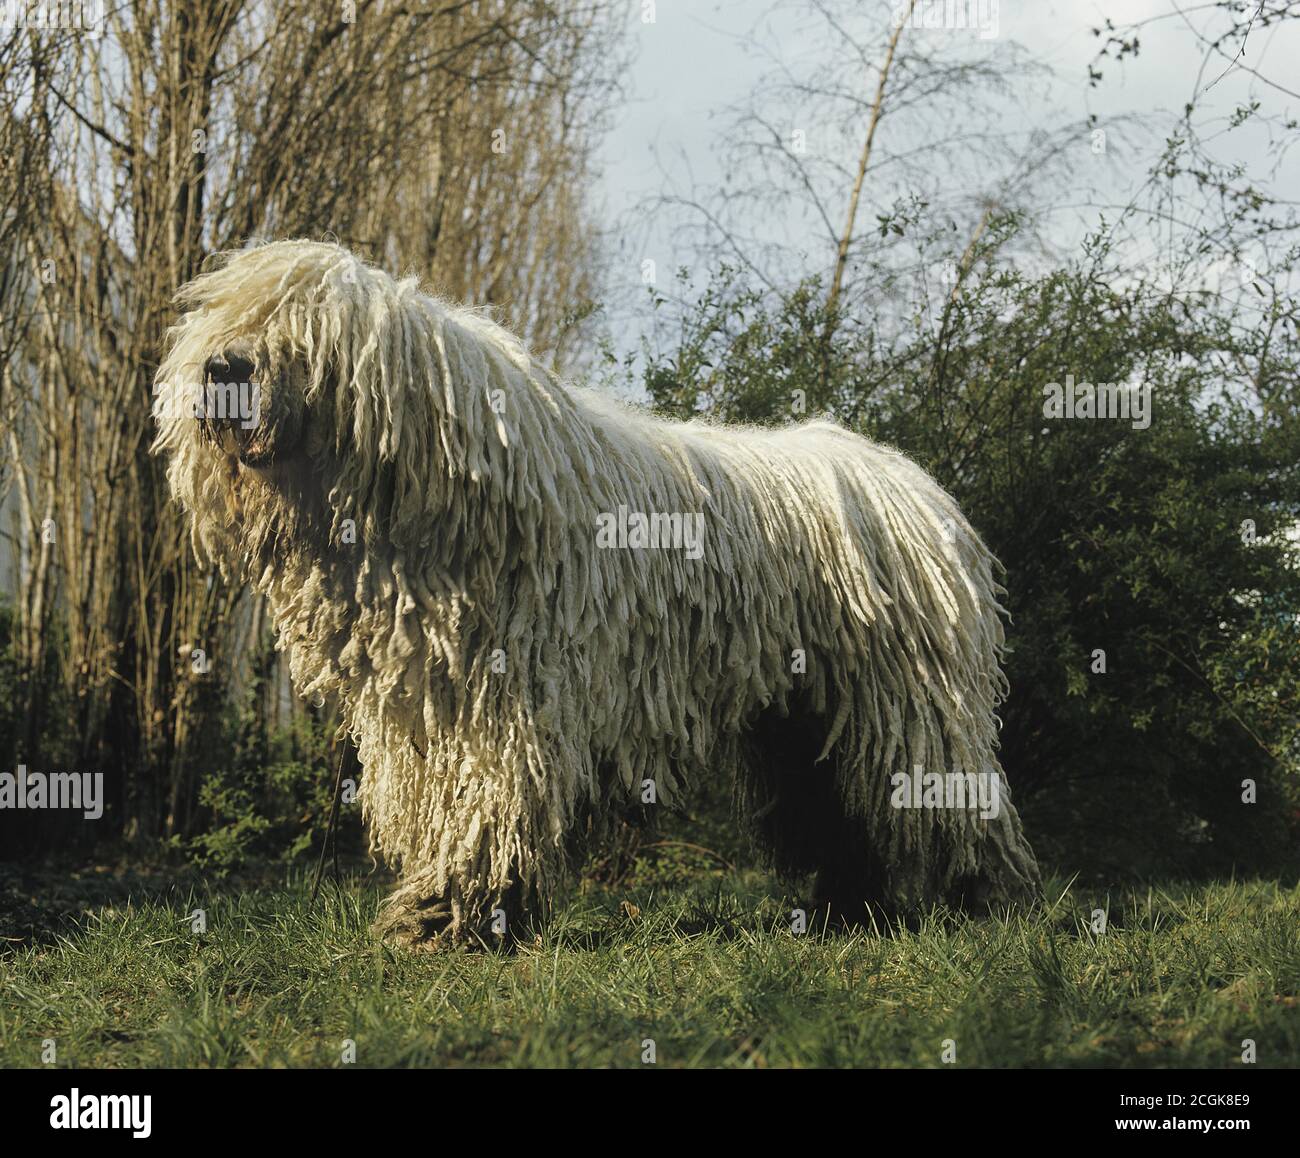 Komondor Dog, Adult standing on Grass Stock Photo